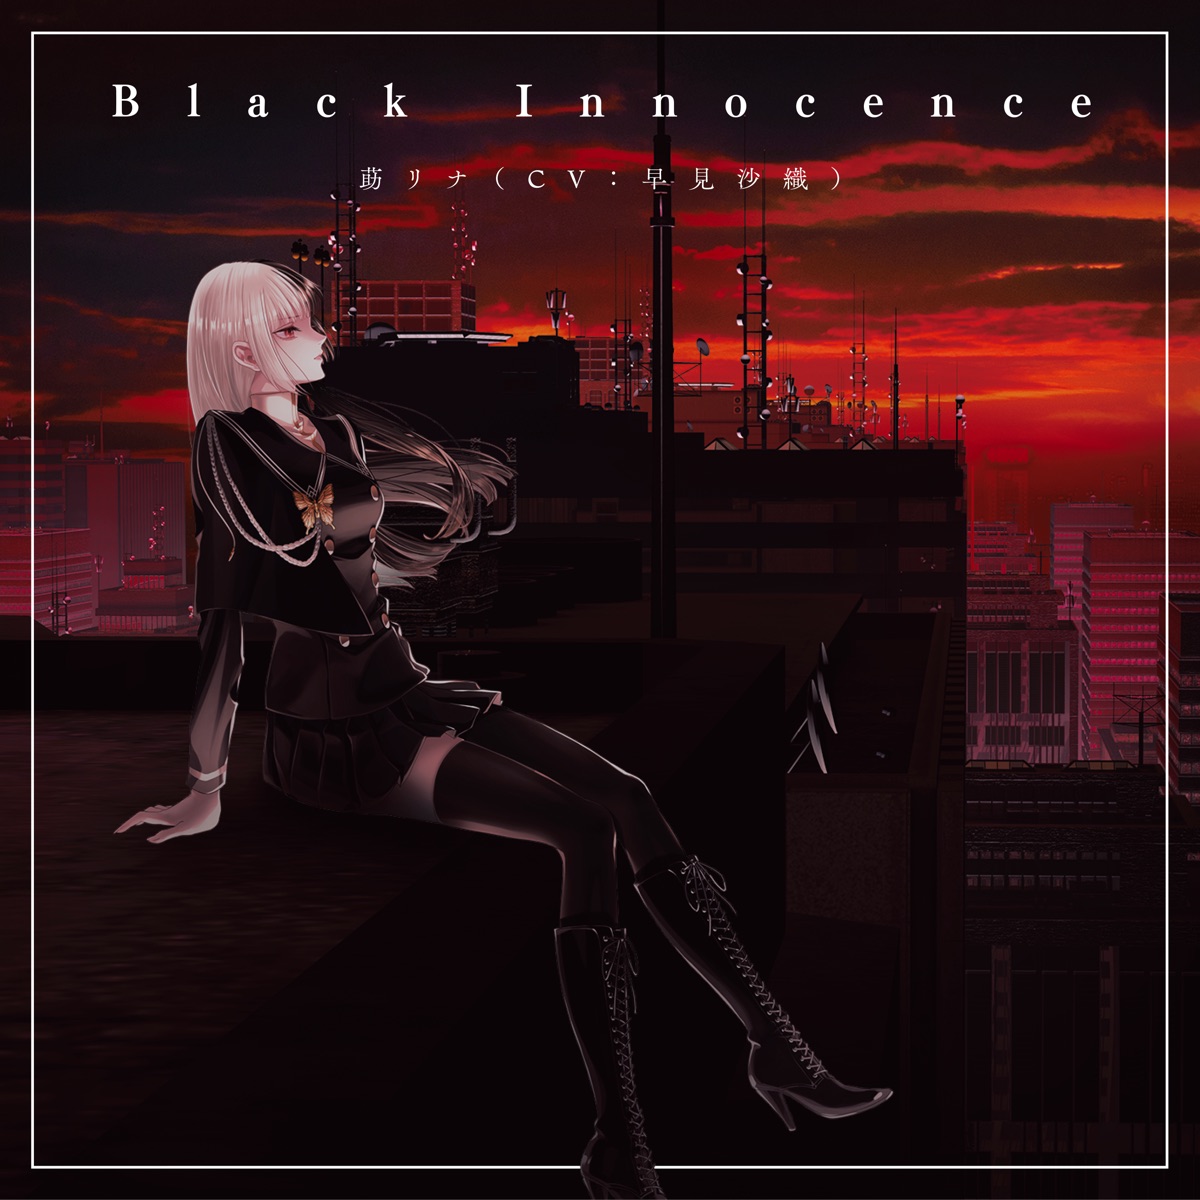 Cover art for『Rina Azami (Saori Hayami) - Black Innocence』from the release『Black Innocence』